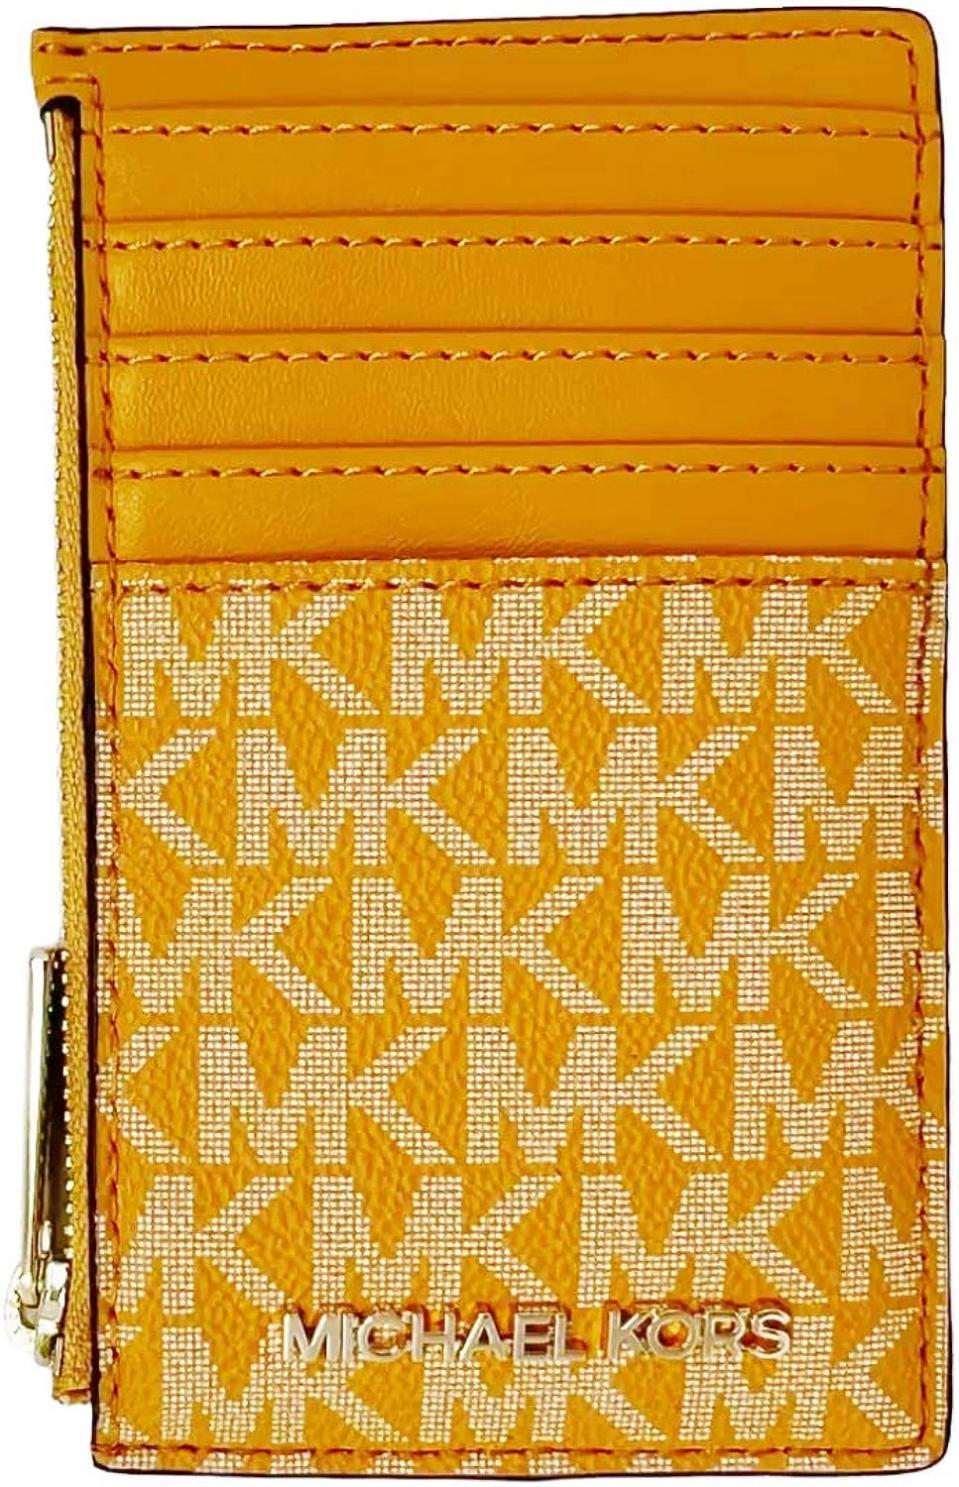 Michael Kors Jet Set Travel Medium Top Zip Card Case Wallet Honeycomb Coin Pouch